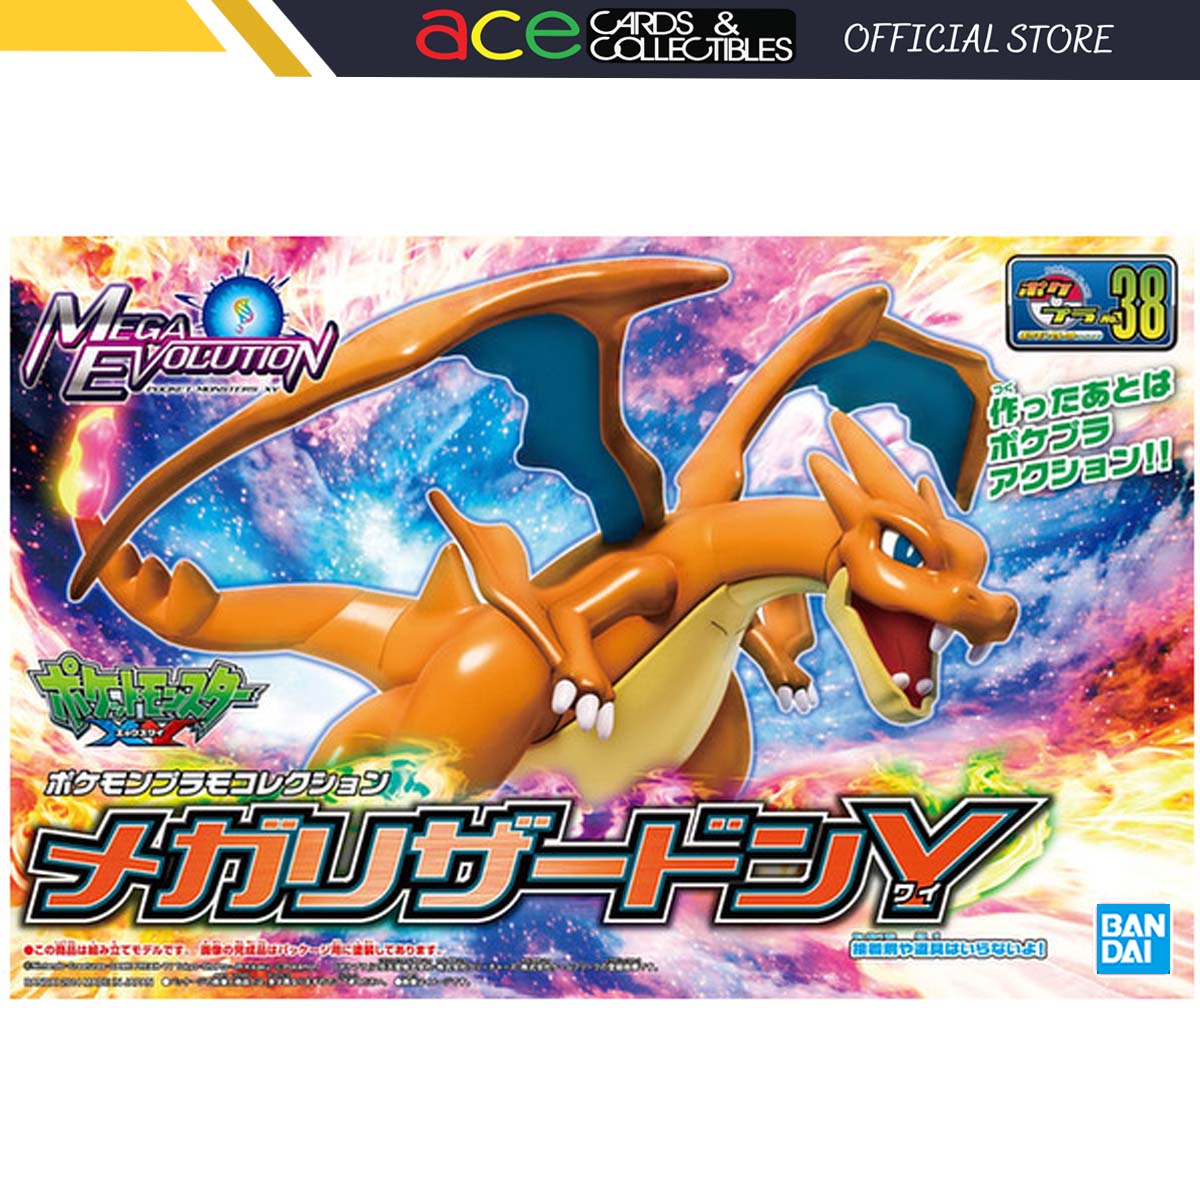 Pokemon Plastic Model Collection 38 "Mega Lizardon" (Charizard) Y-Bandai-Ace Cards & Collectibles